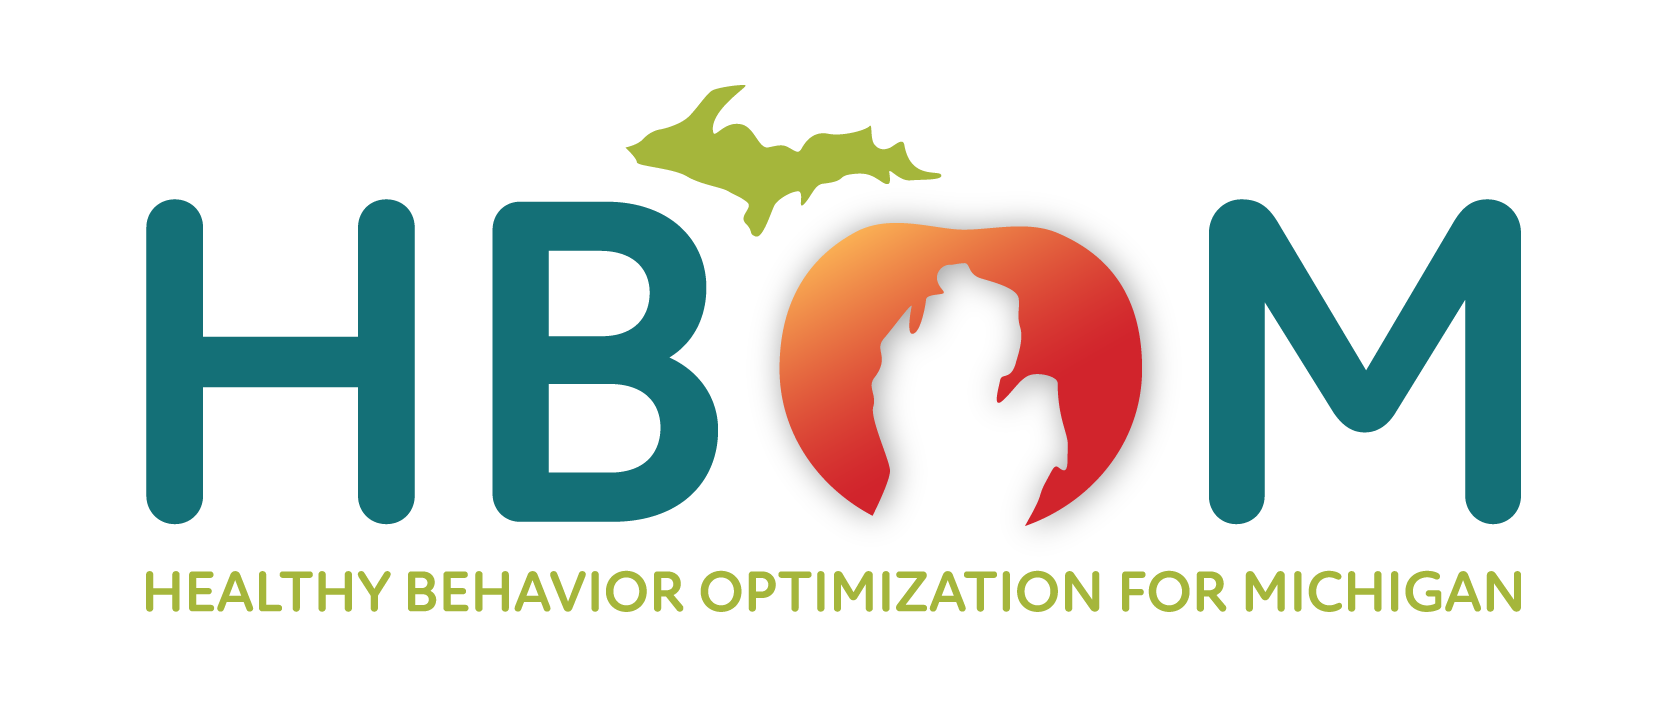 Healthy Behavior Optimization for Michigan